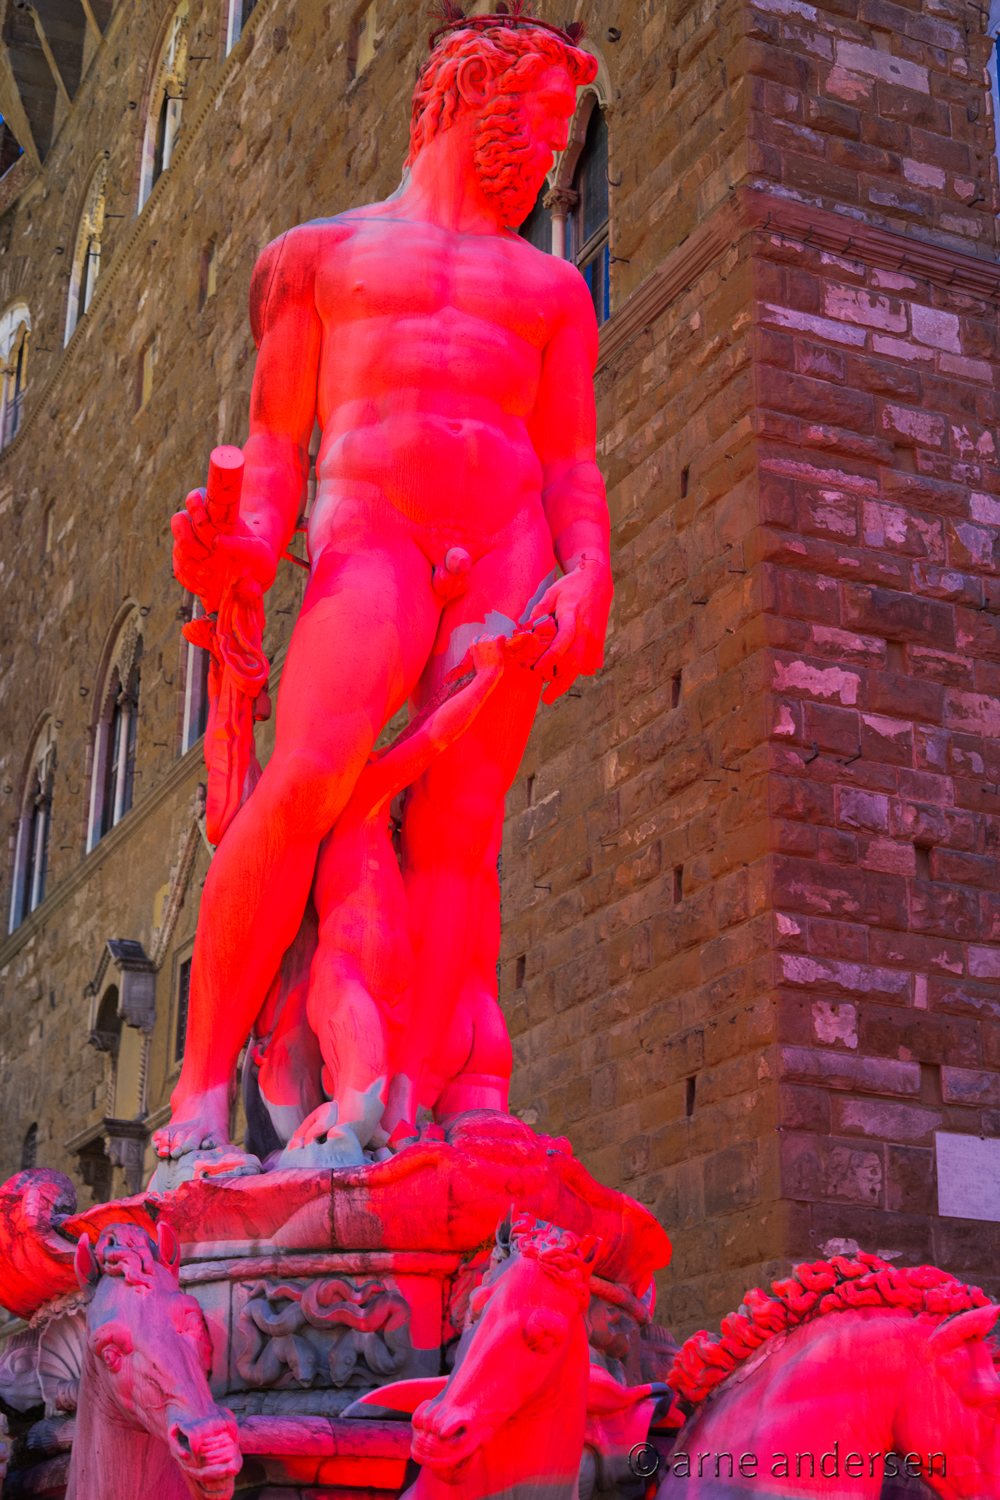 Statue vor dem Palazzo Vecchio